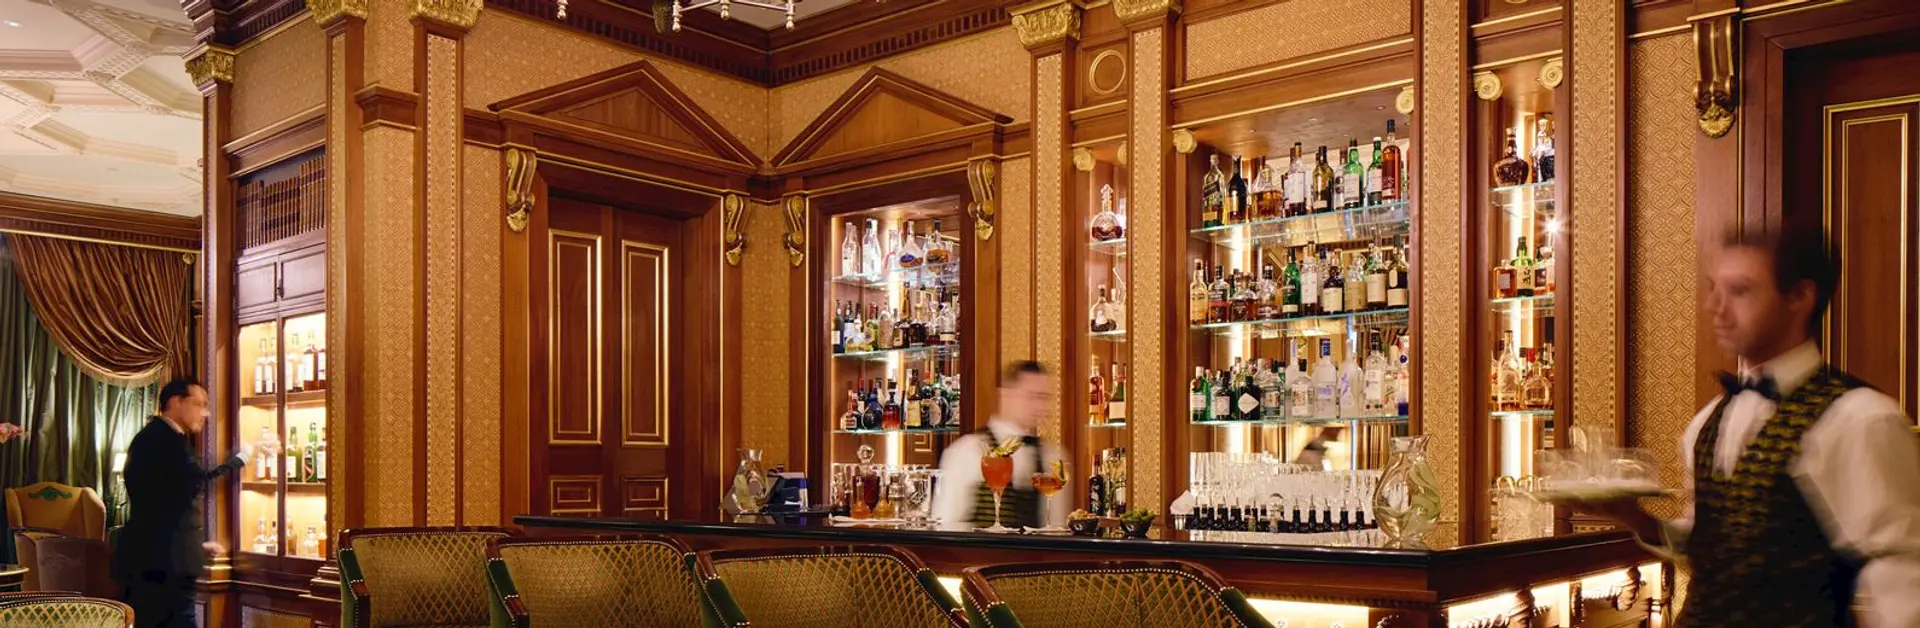 Hotel review Restaurants & Bars' - The Lanesborough - 1